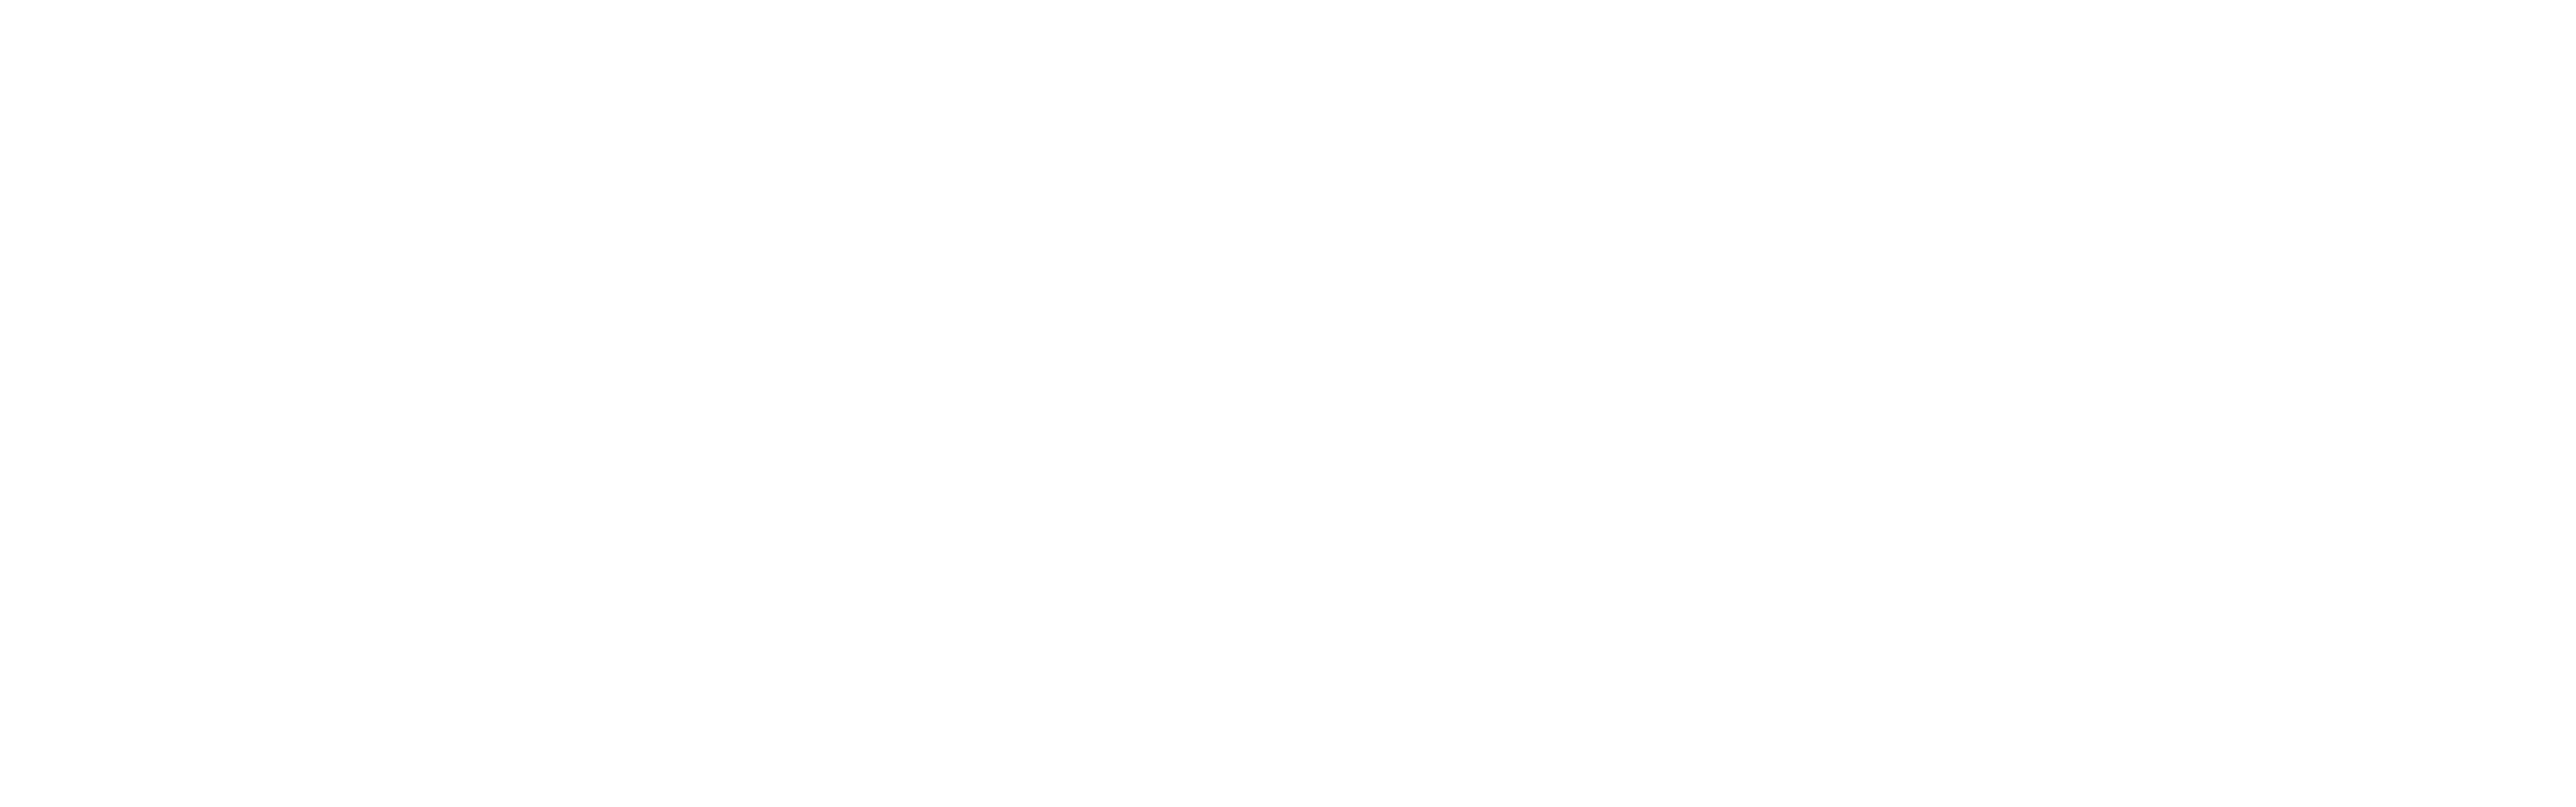 Sundance Retrievers Inc Tagline White Logo R3 100 full